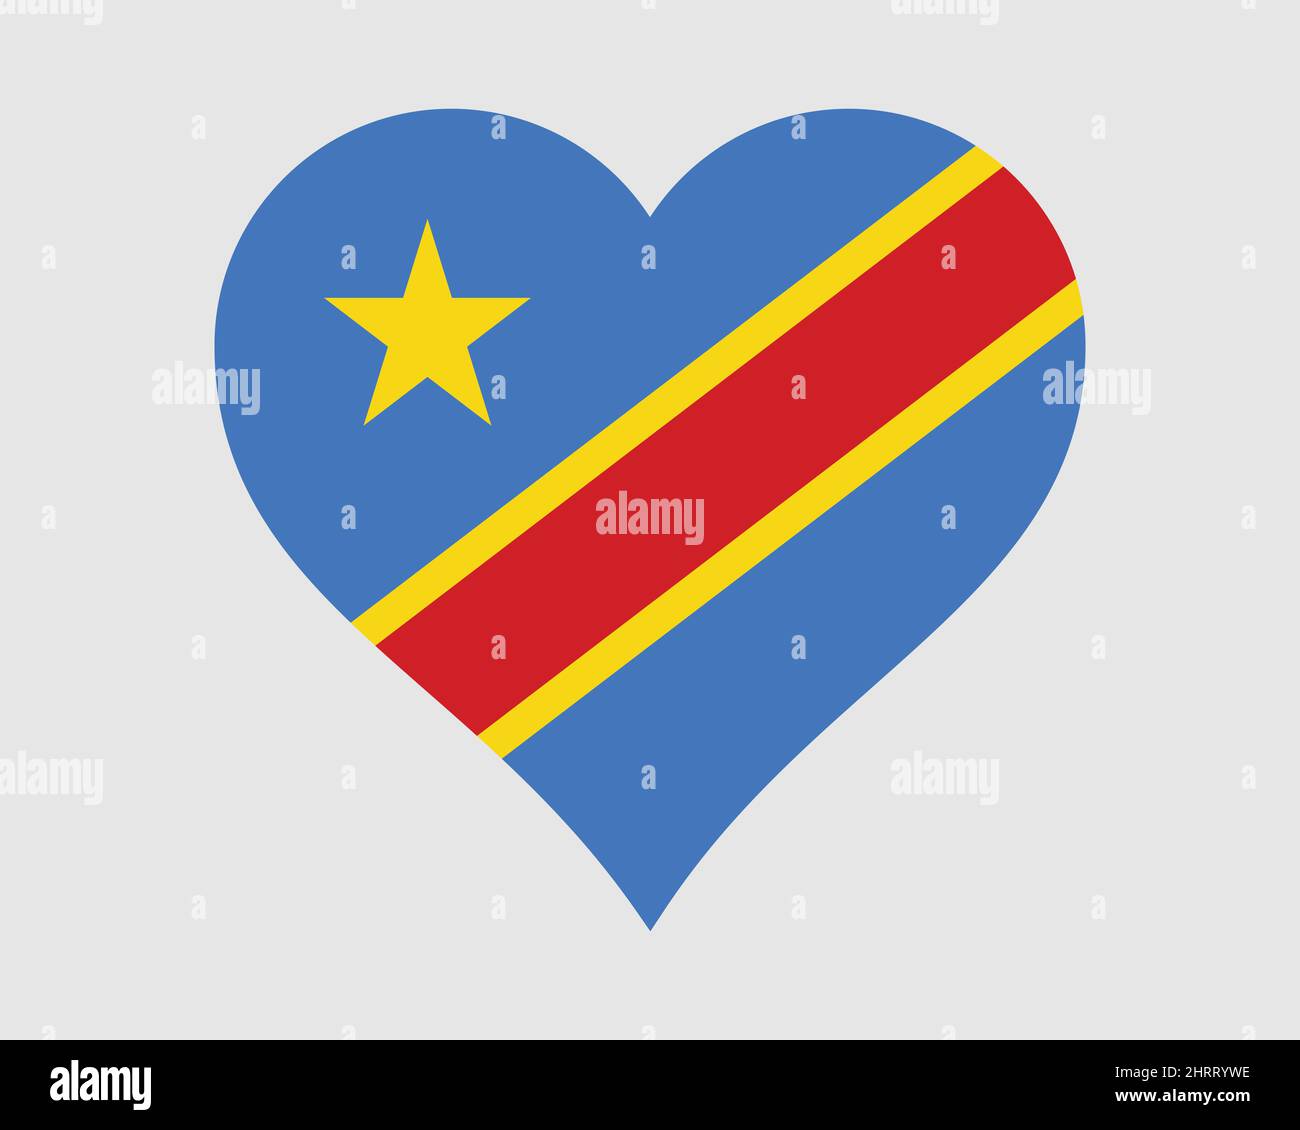 Congo Kinshasa Heart Flag. DR Congo, DRC, DROC Love Shape Country Nation National Flag. Democratic Republic of the Congo Banner Icon Sign Symbol. EPS Stock Vector